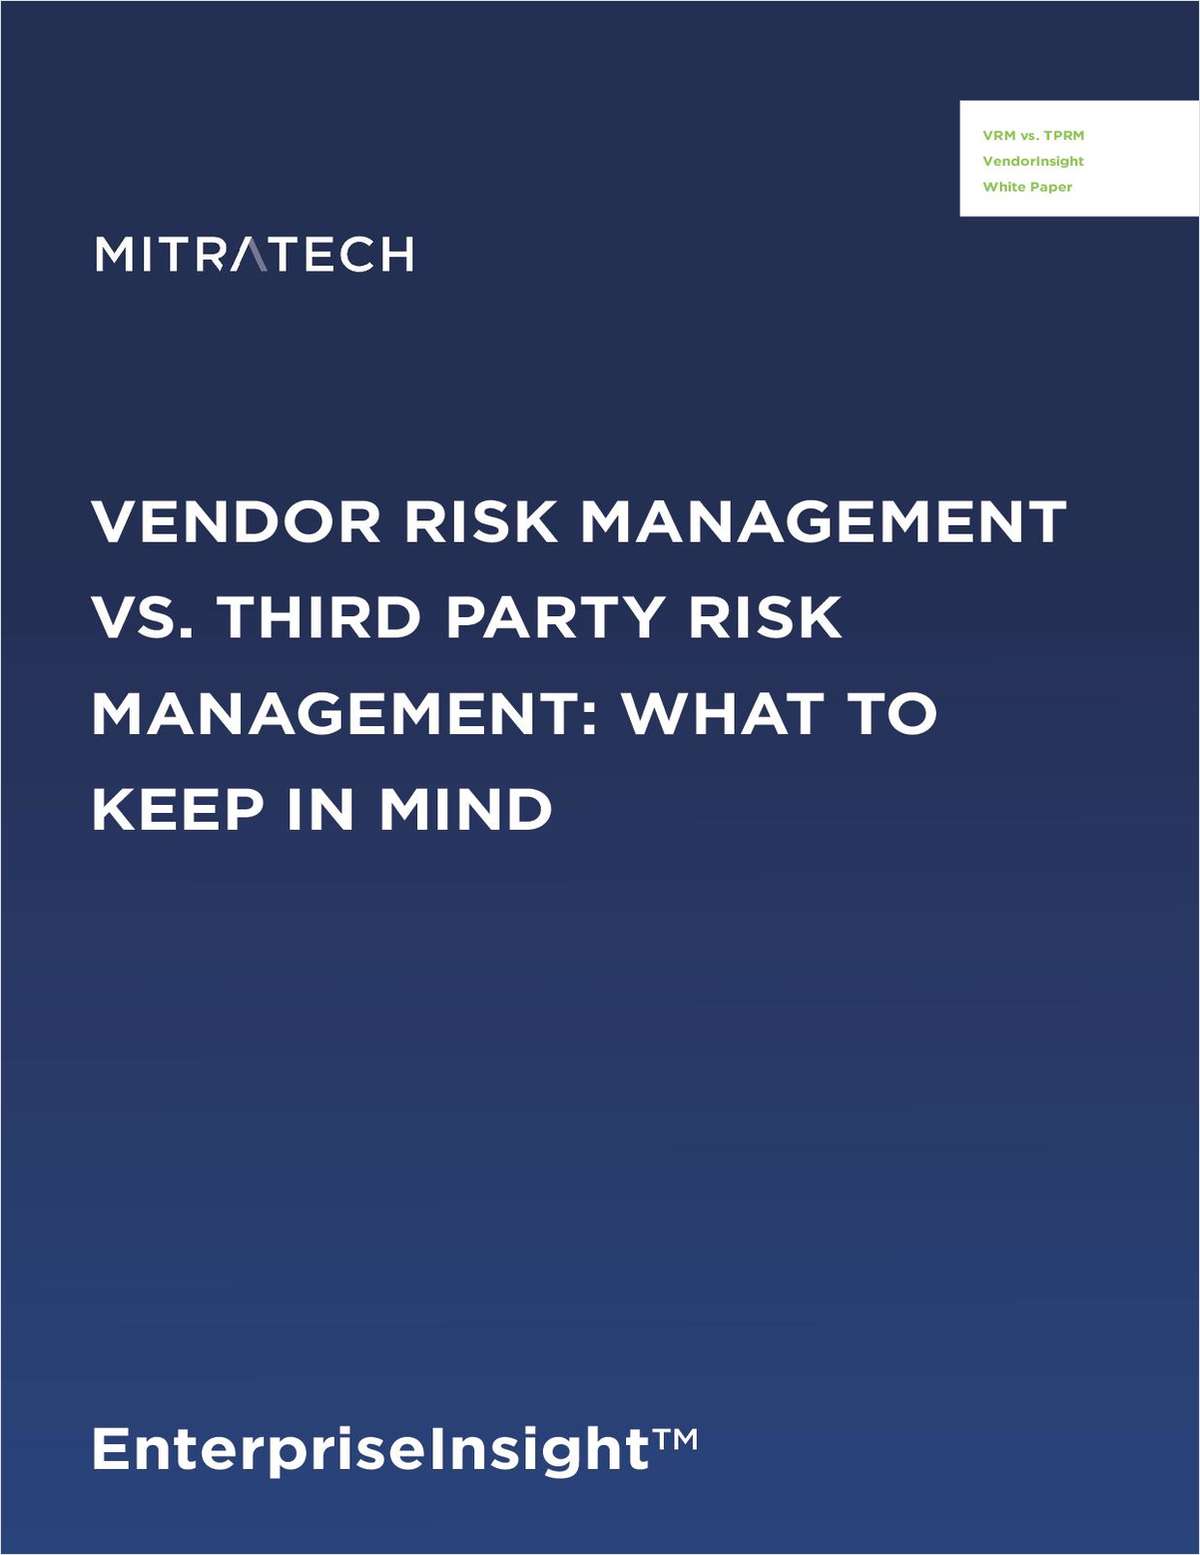 White Paper: Vendor Risk Management vs Third Party Risk Management